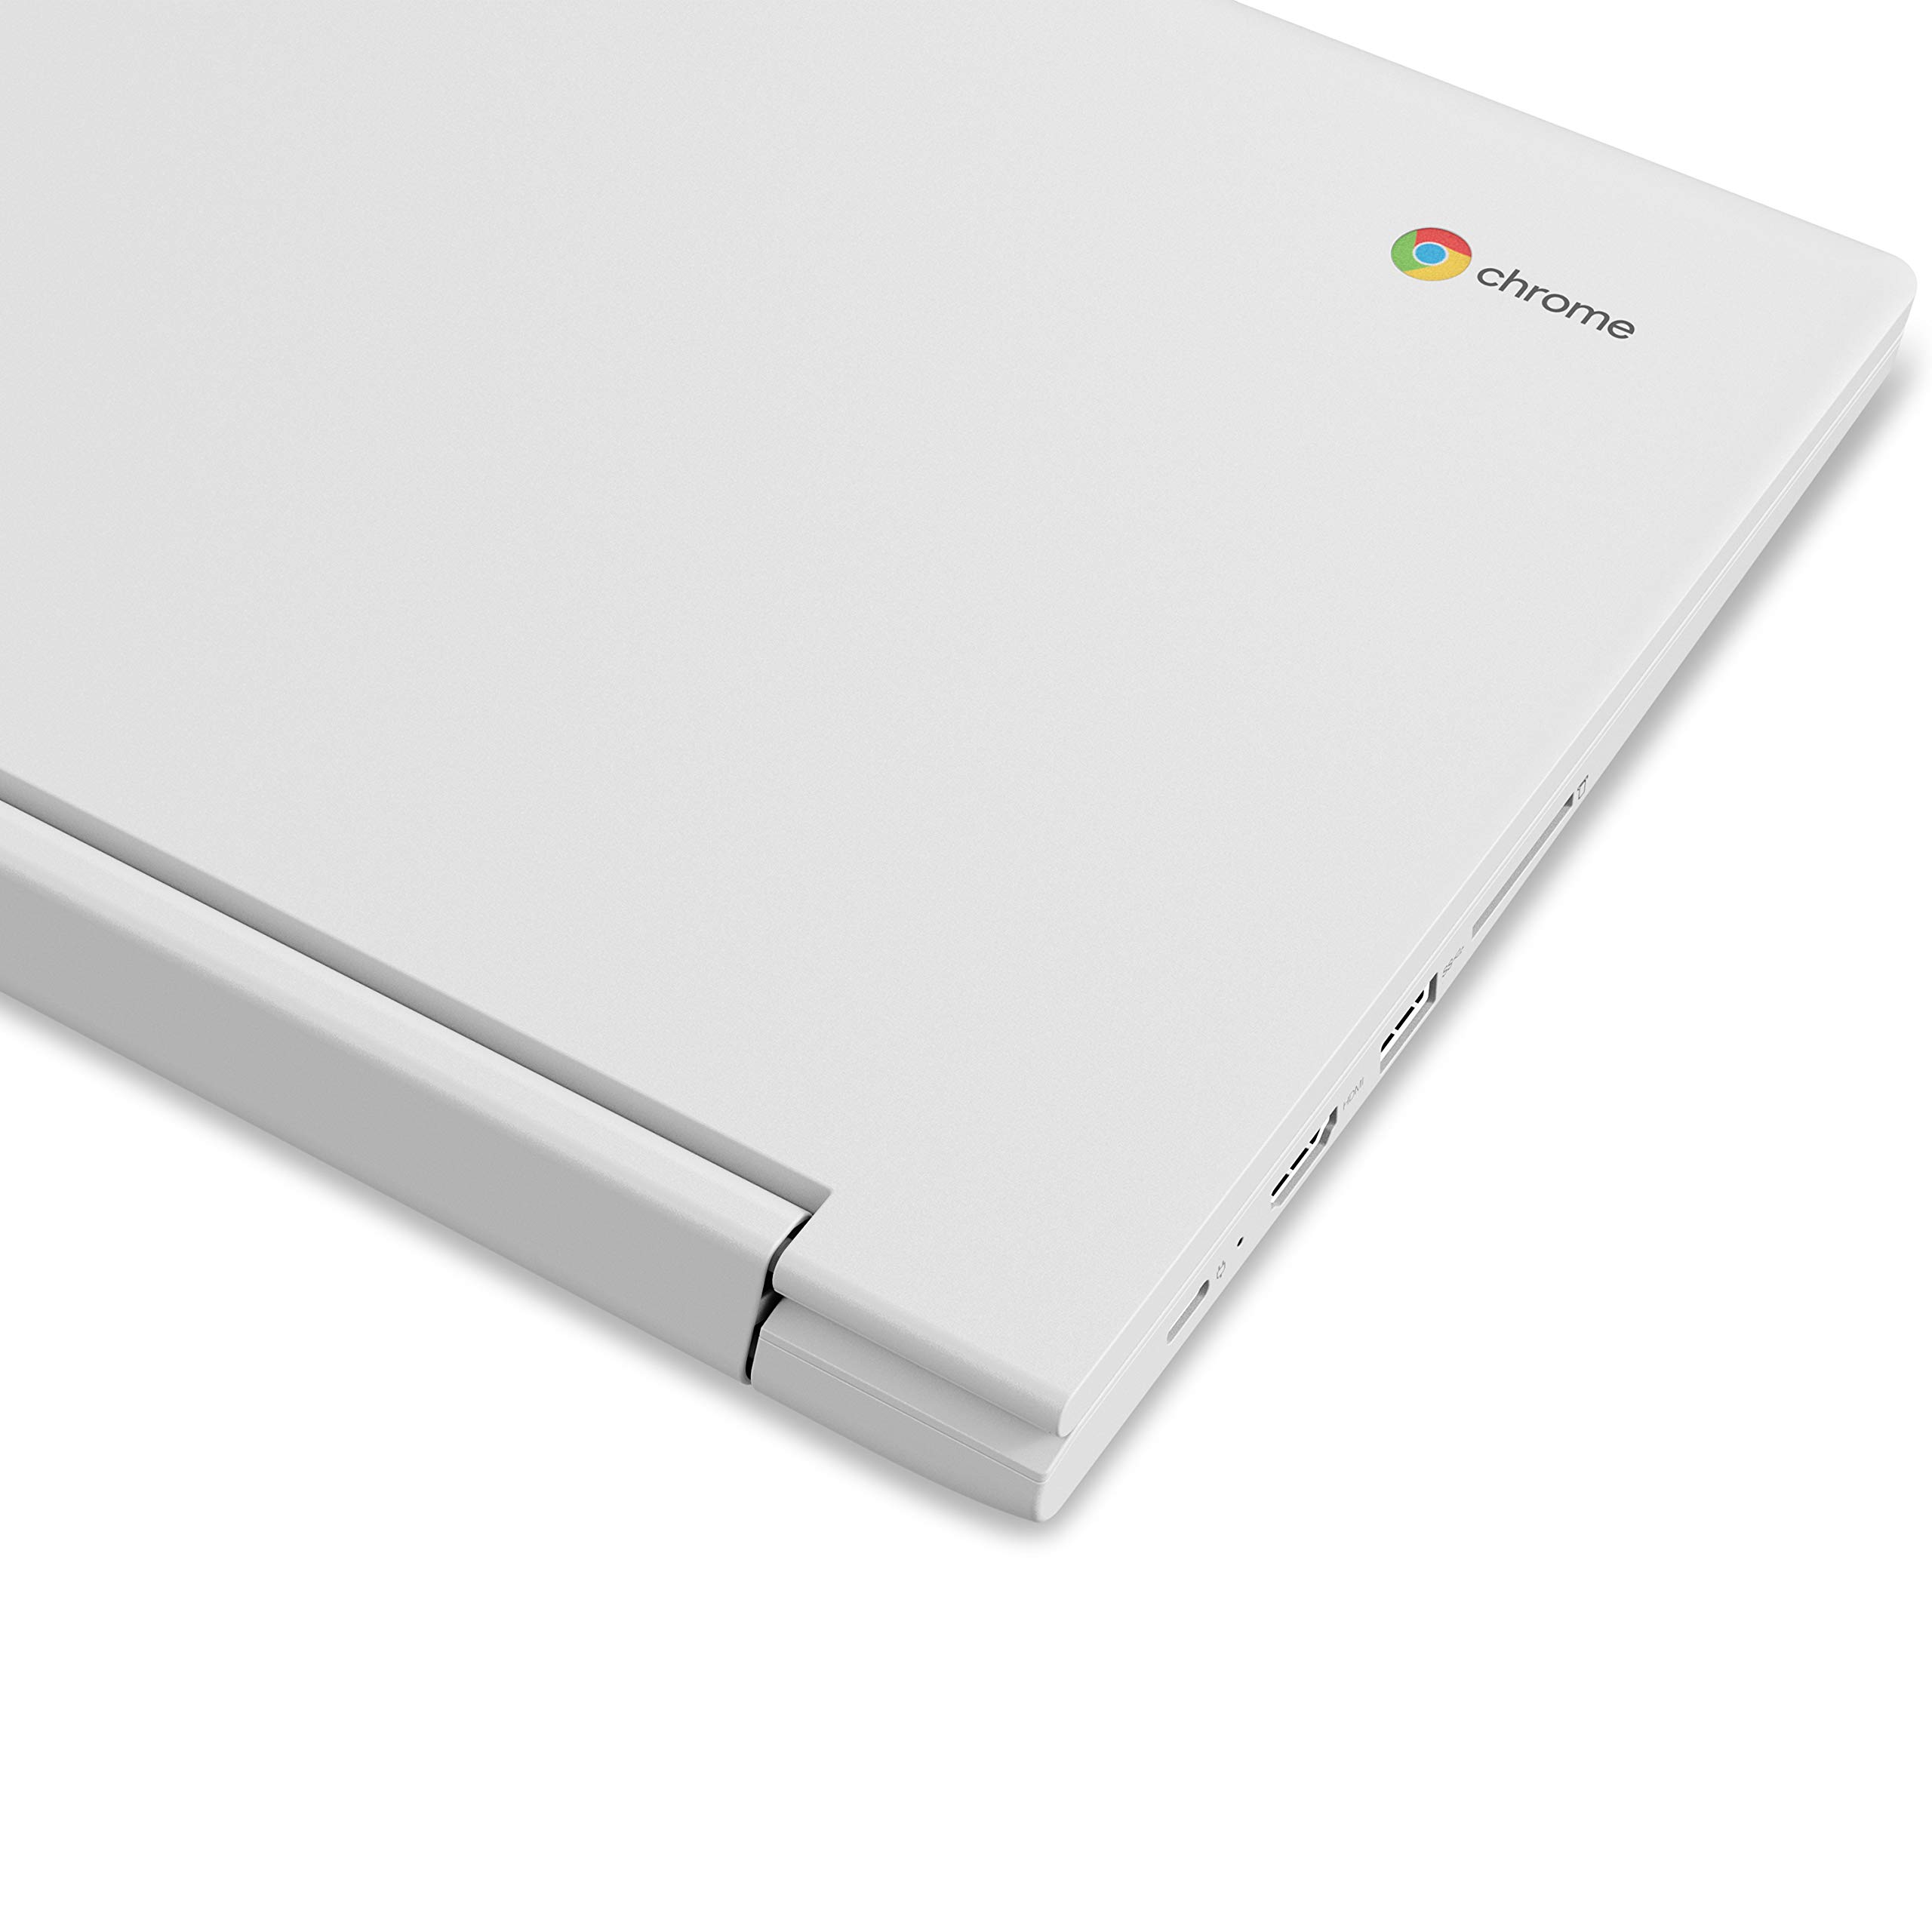 Lenovo Chromebook C330 2-in-1 Convertible Laptop, 11.6